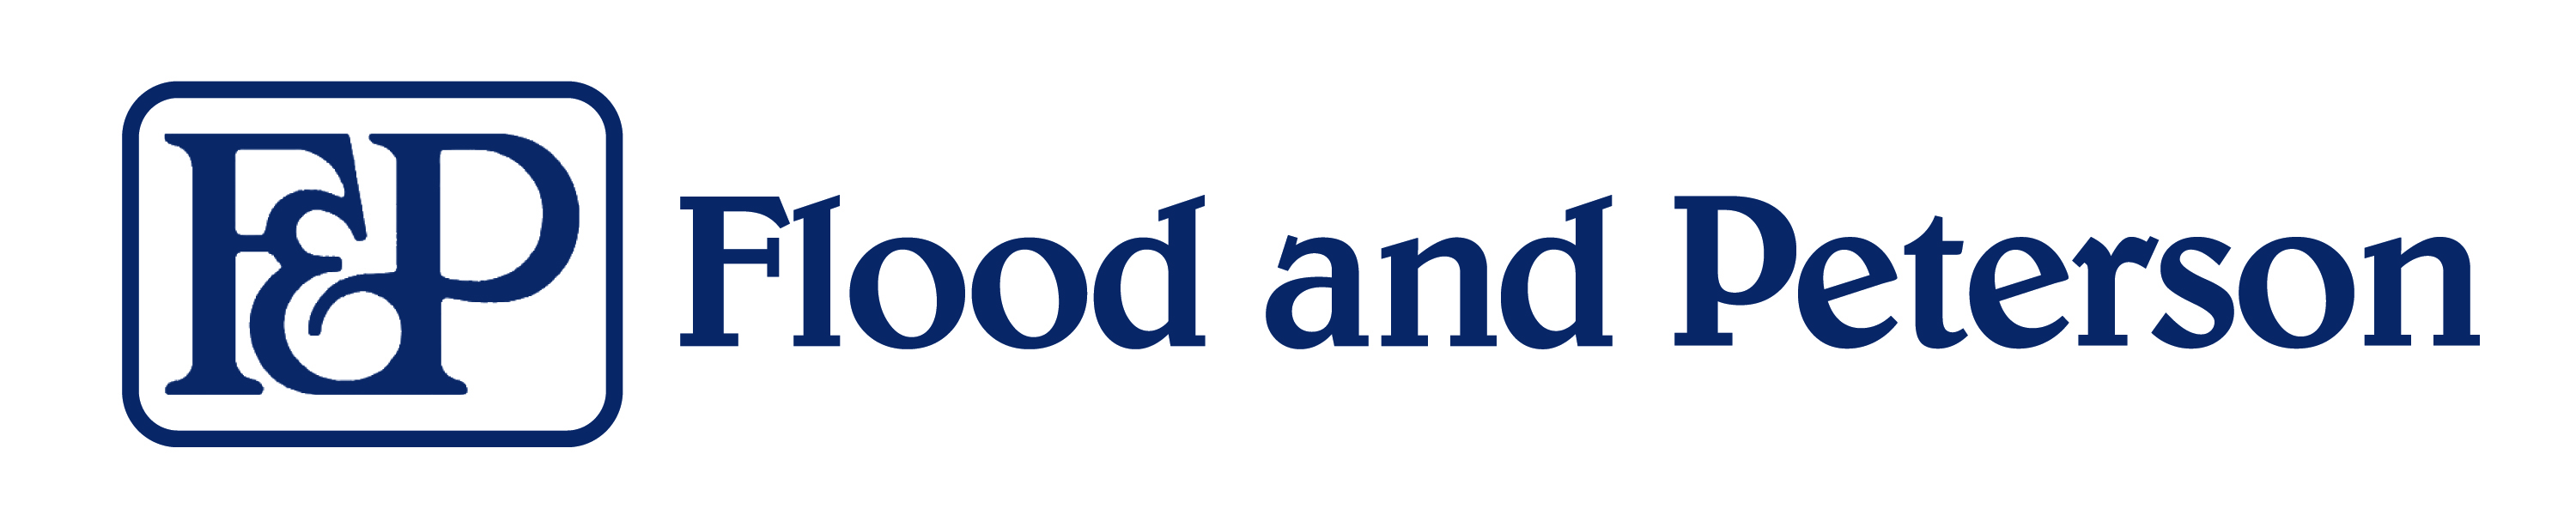 Flood & Peterson logo